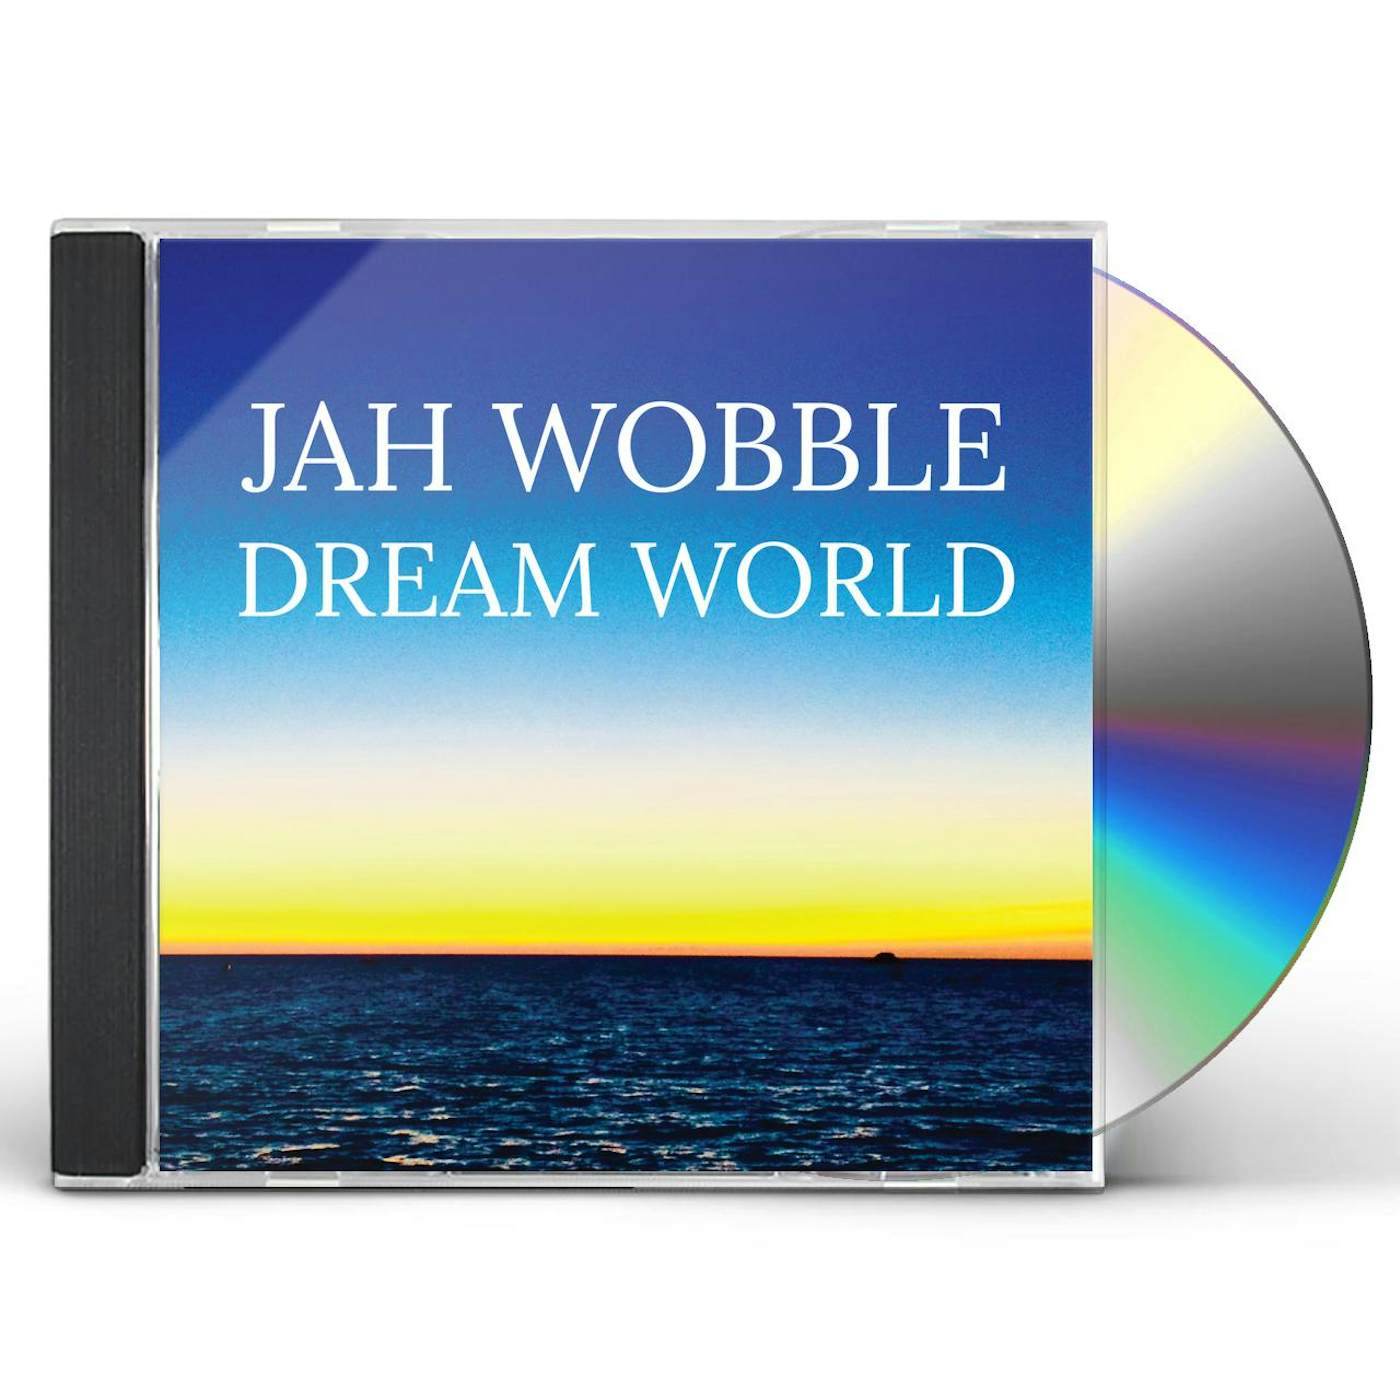 Jah Wobble DREAM WORLD CD